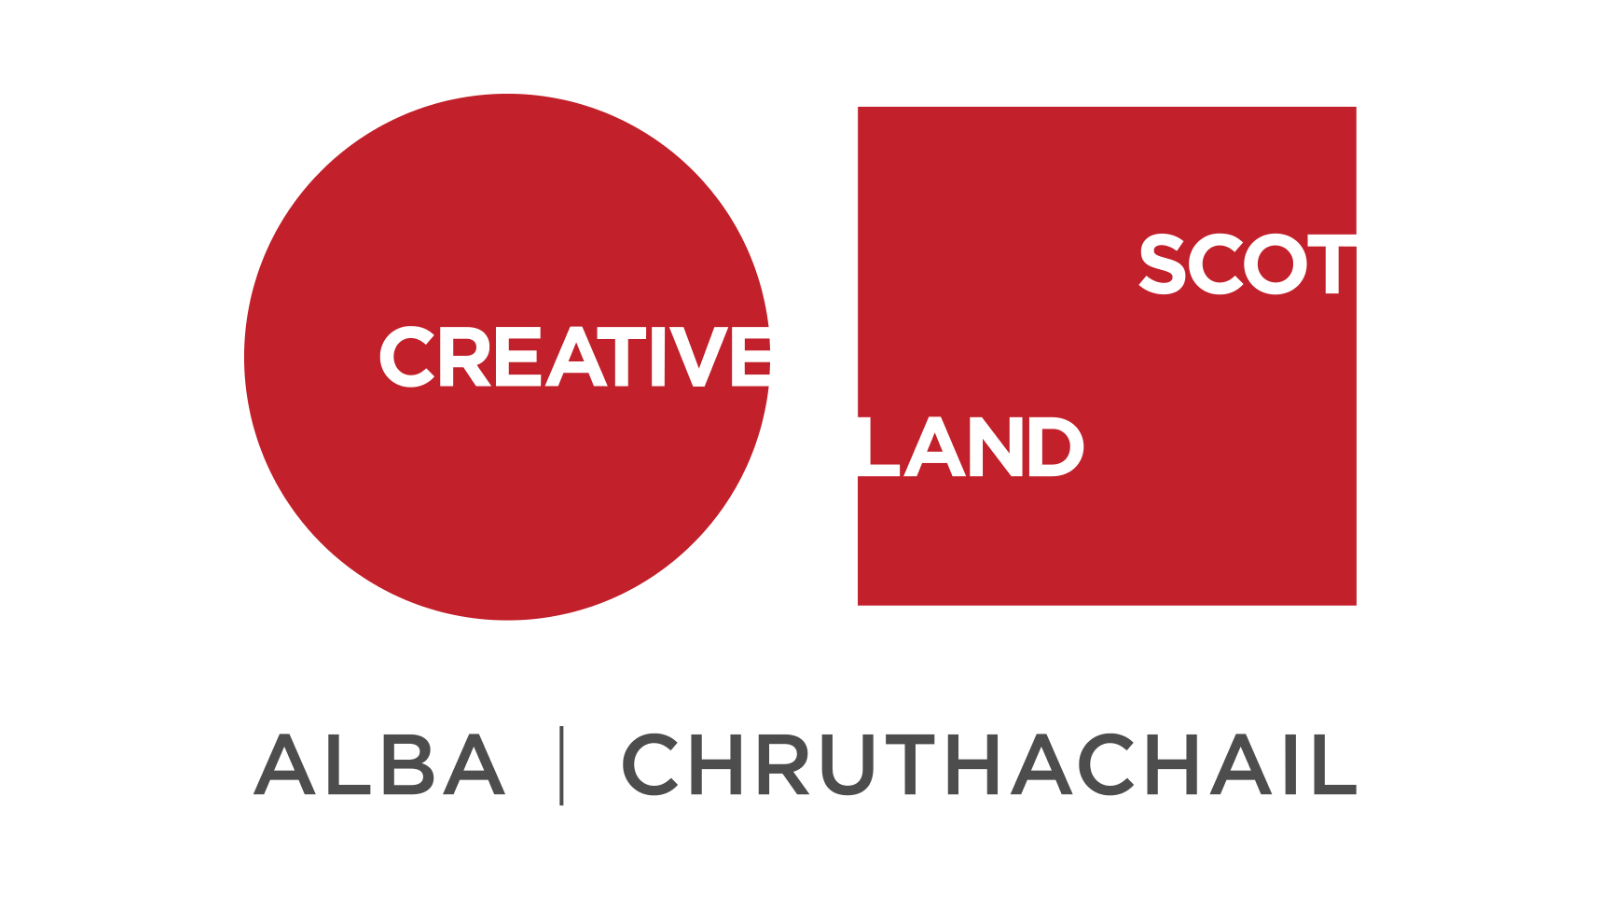 Publication of Creative Scotland’s 2021/22 Annual Plan